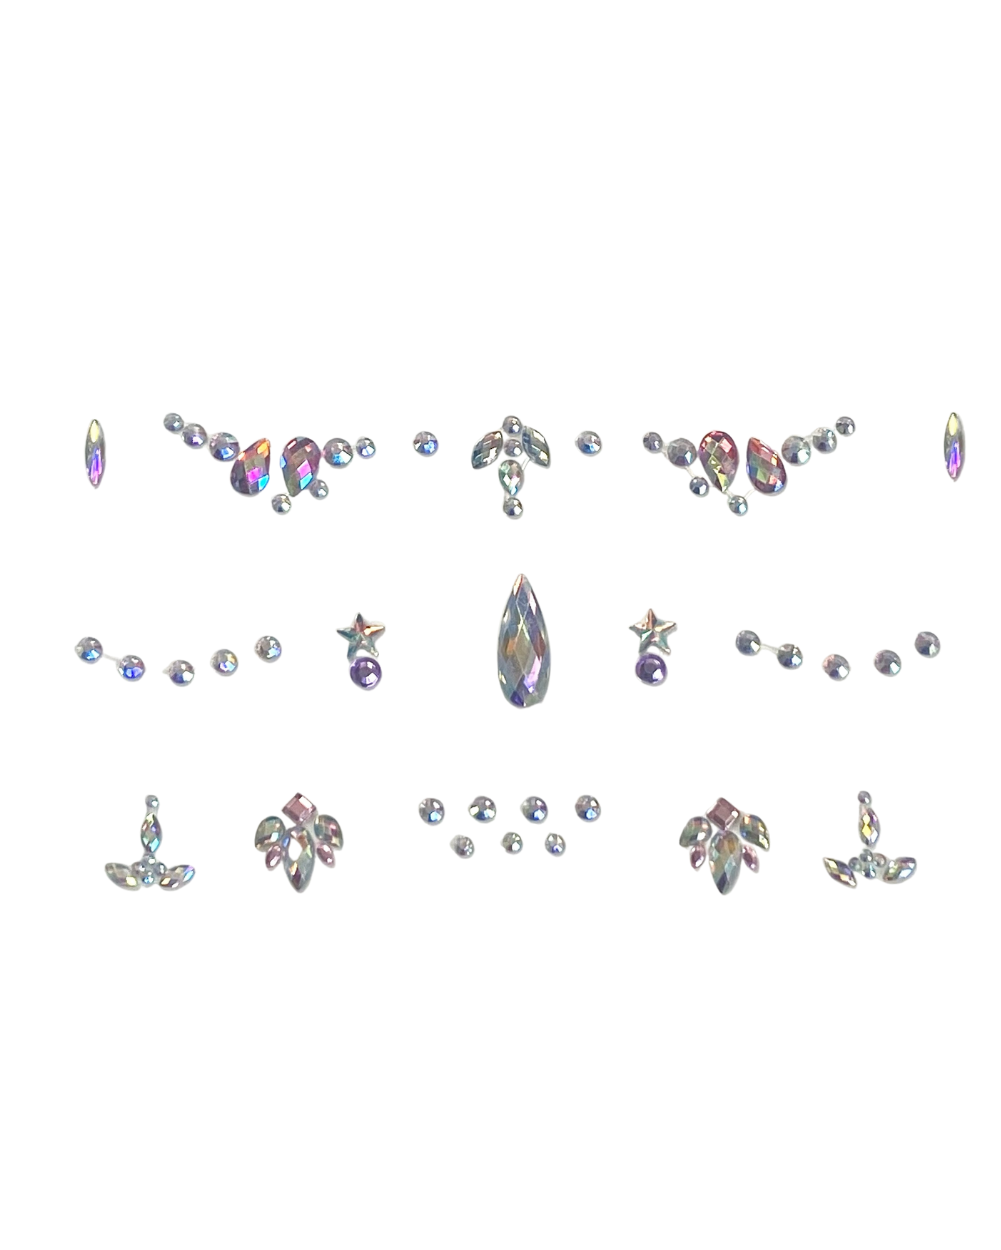 Mandala  - Pink and Purple Jewel Mix Pack - Lunautics